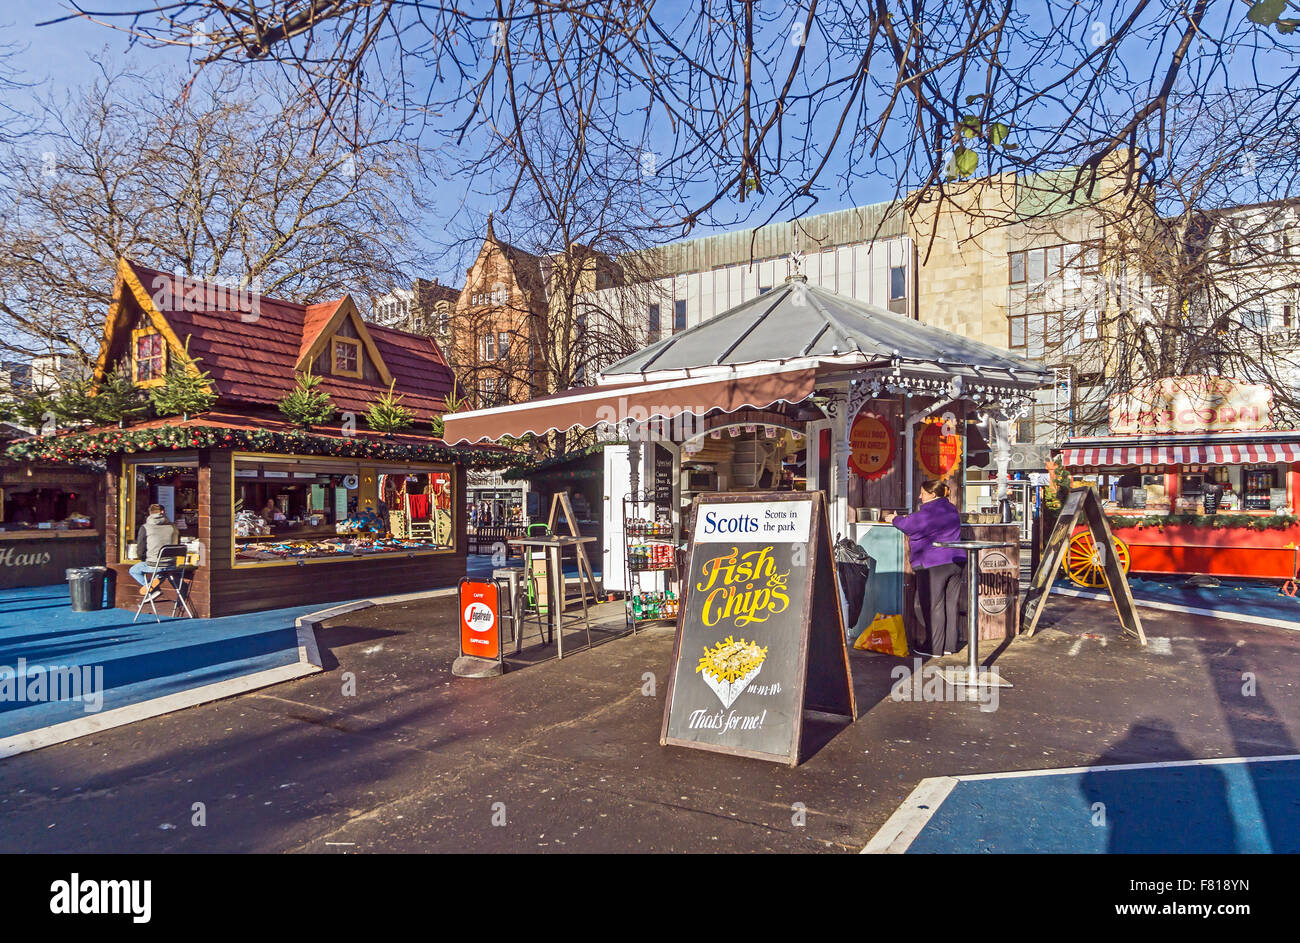 Edinburgh Christmas market 2015 with market stalls Stock Photo